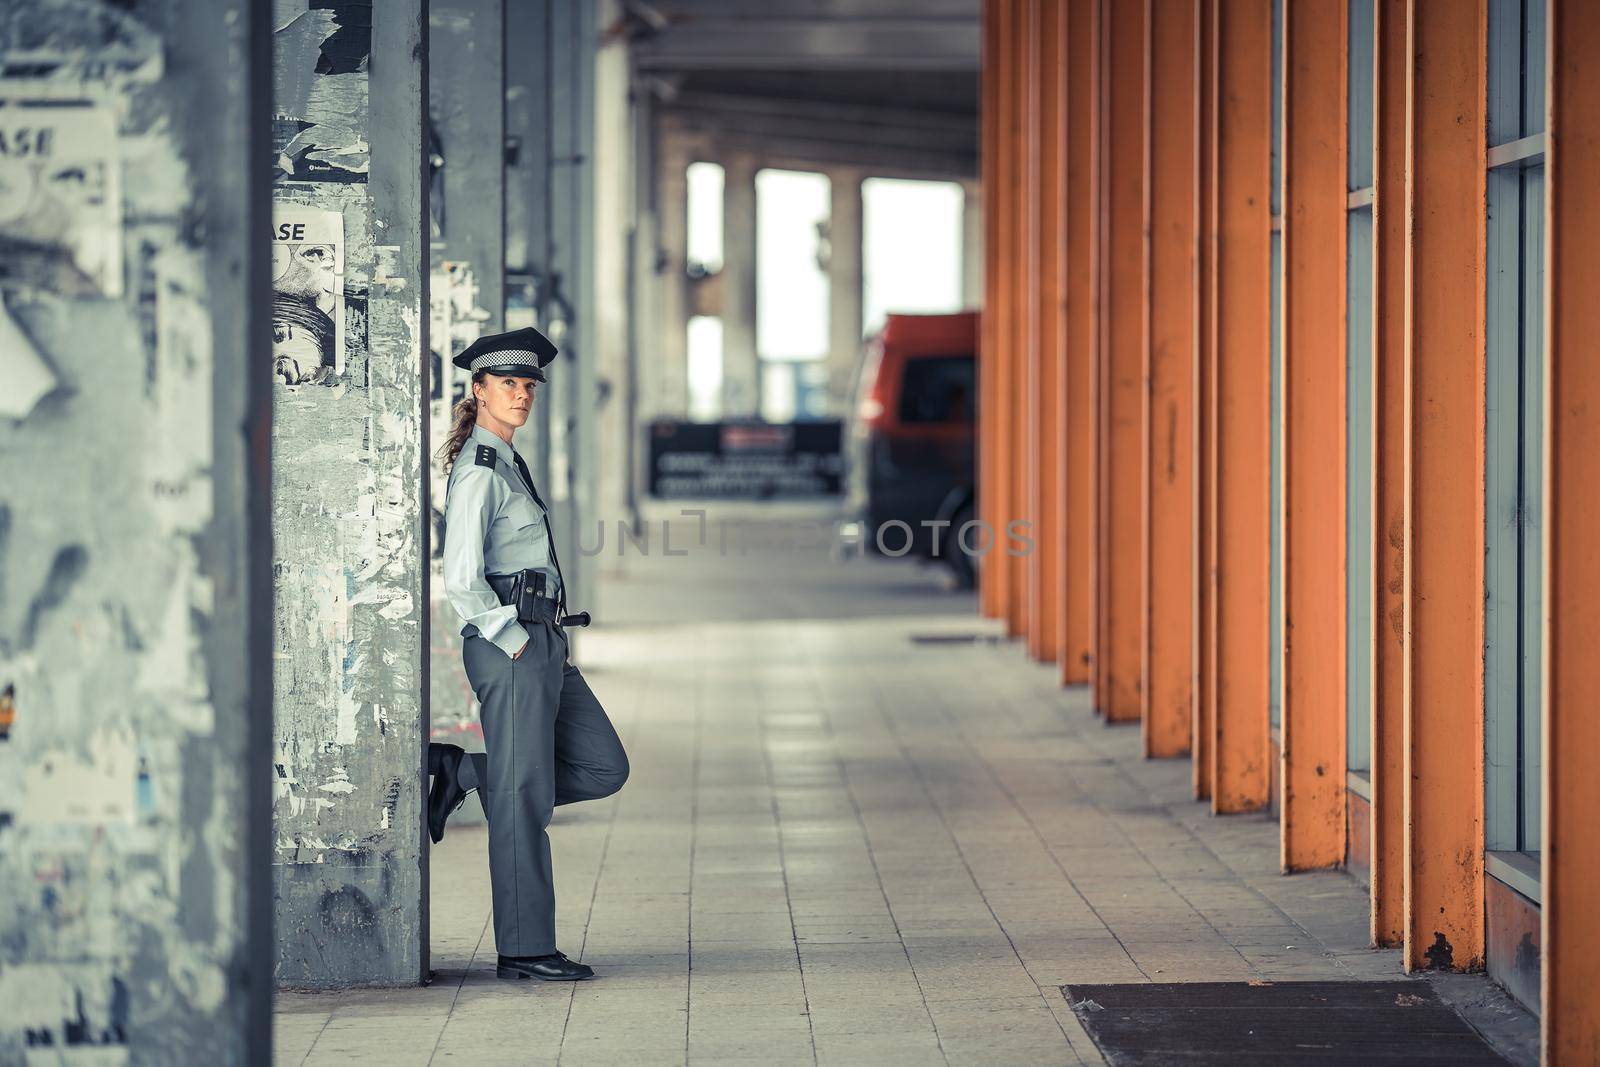 policeman in uniform walking around the city